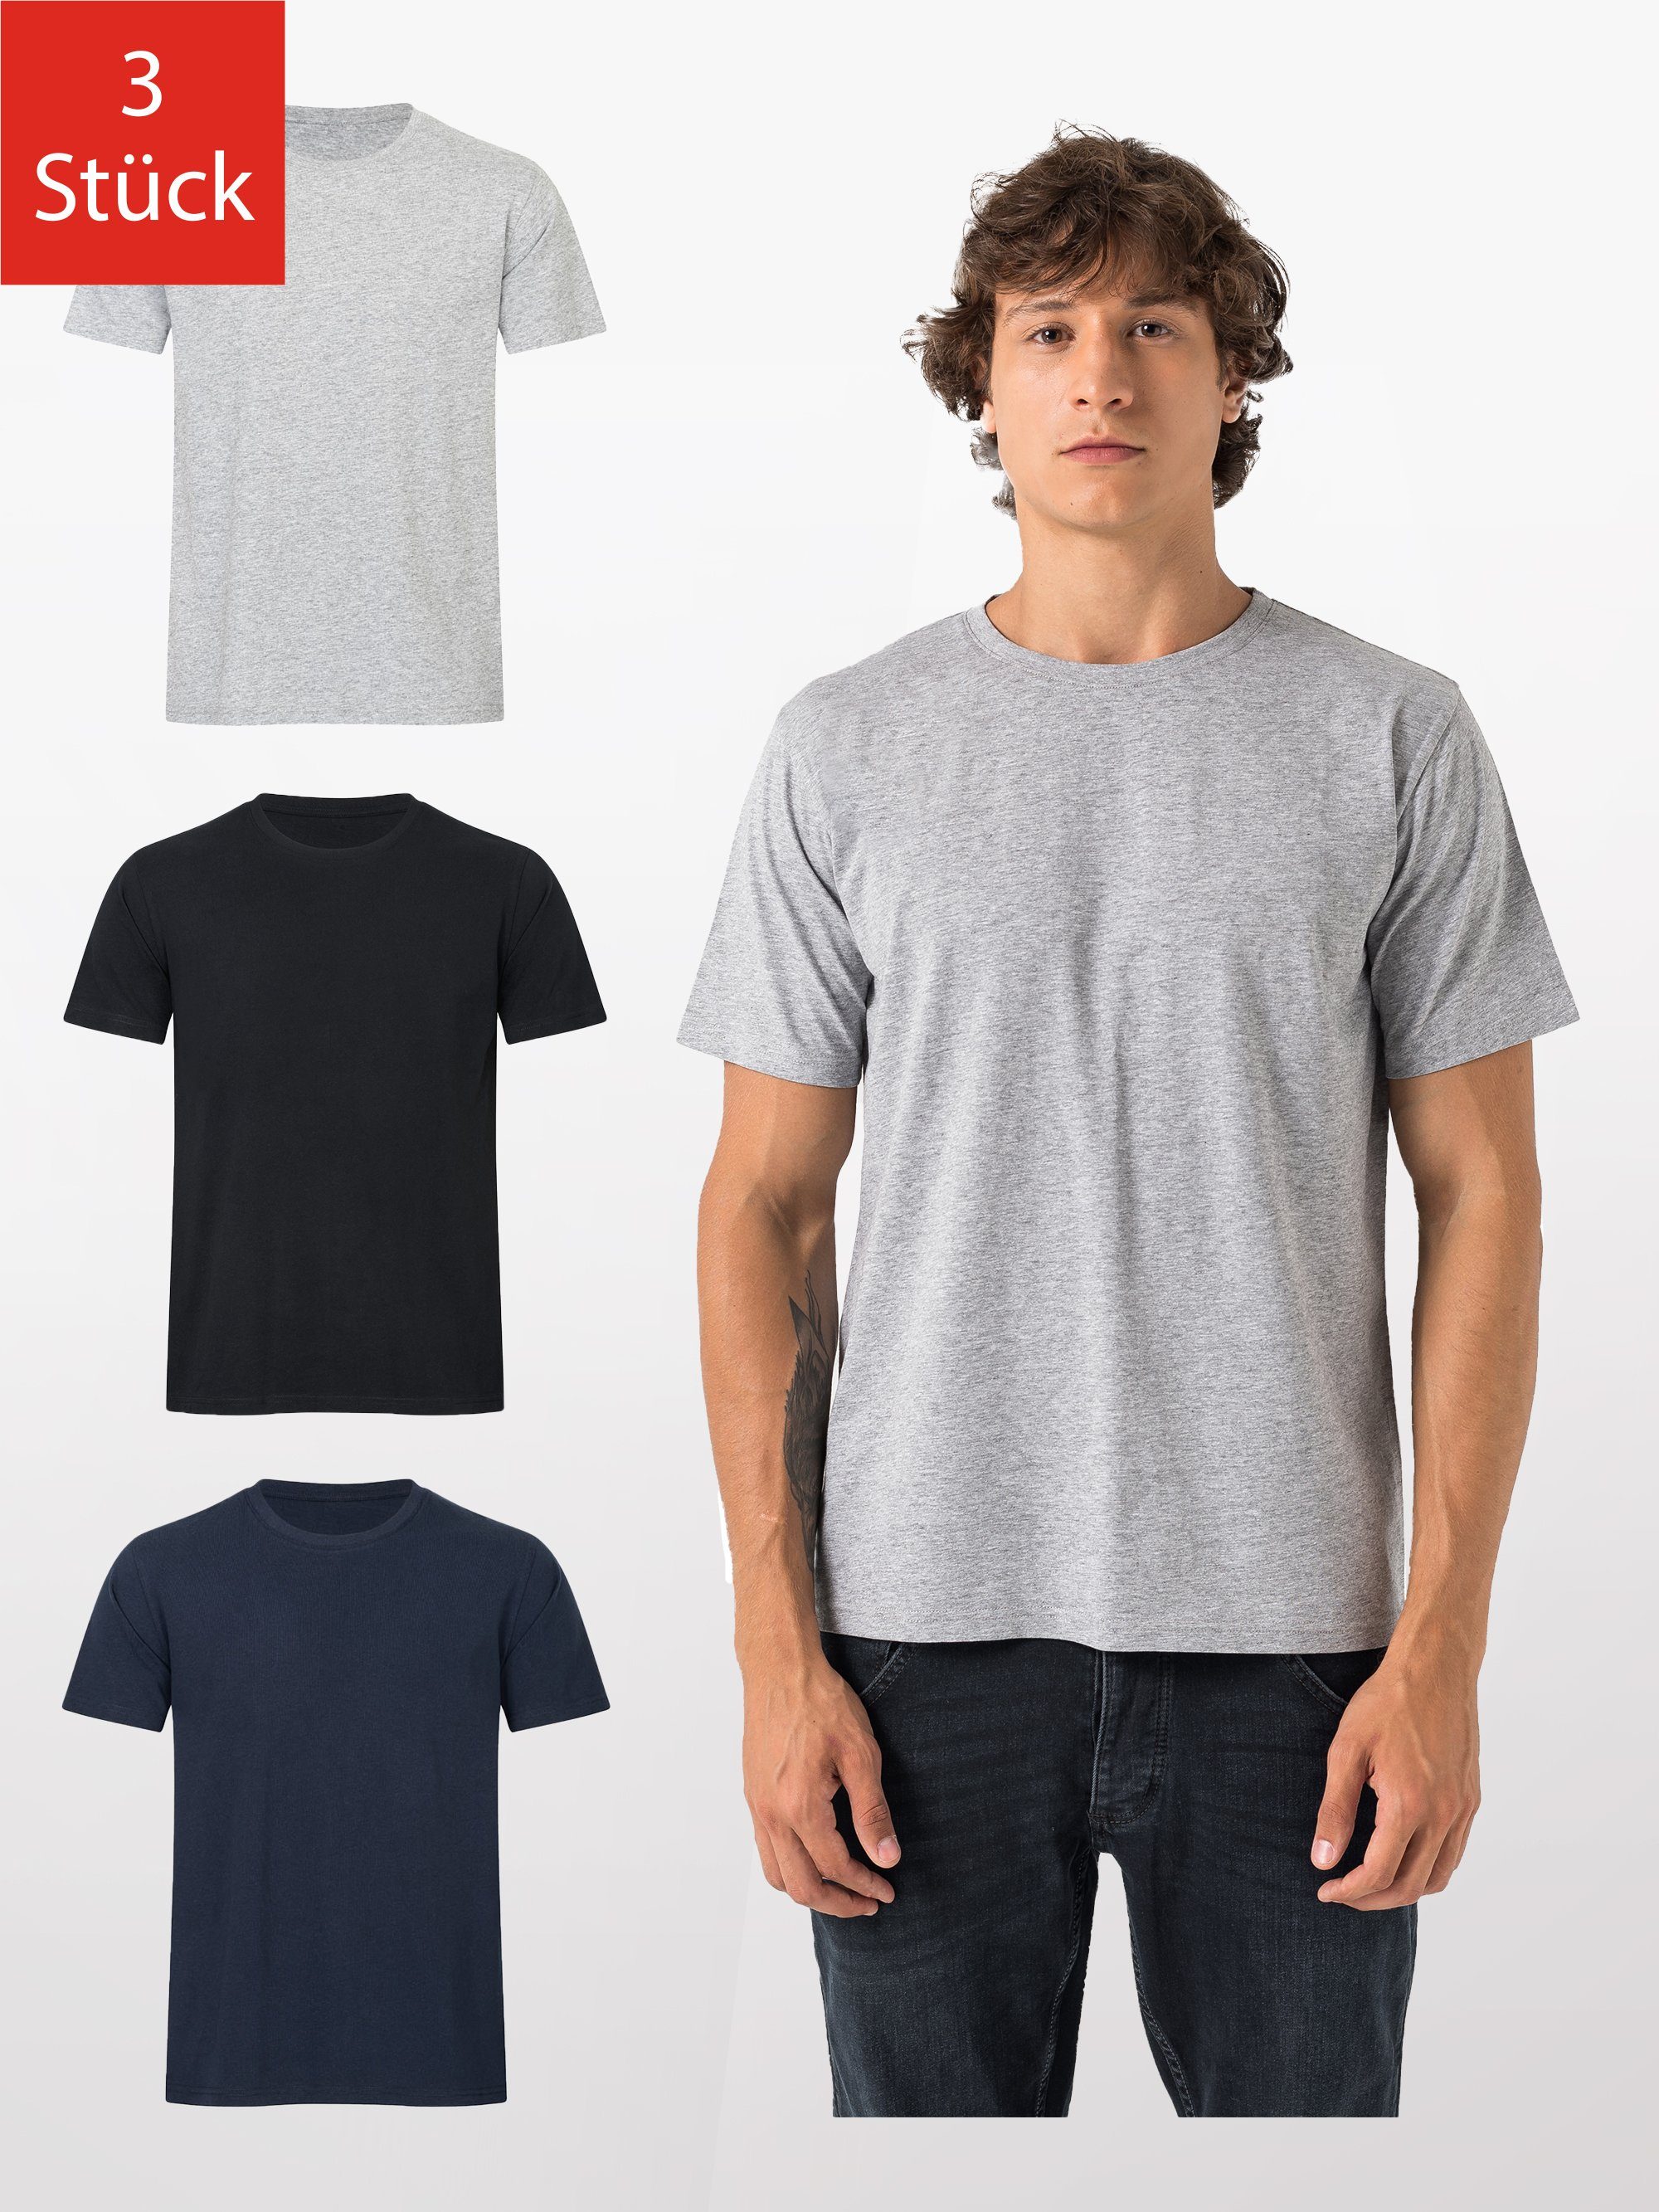 Burnell & Son T-Shirt Tshirt Herren aus 100% Baumwolle Regular Fit Basic Männer Set (S-5XL) (Packung, 3-tlg., 3er-Pack) in Unifarbe 1x Grau + 1x Schwarz + 1x Blau